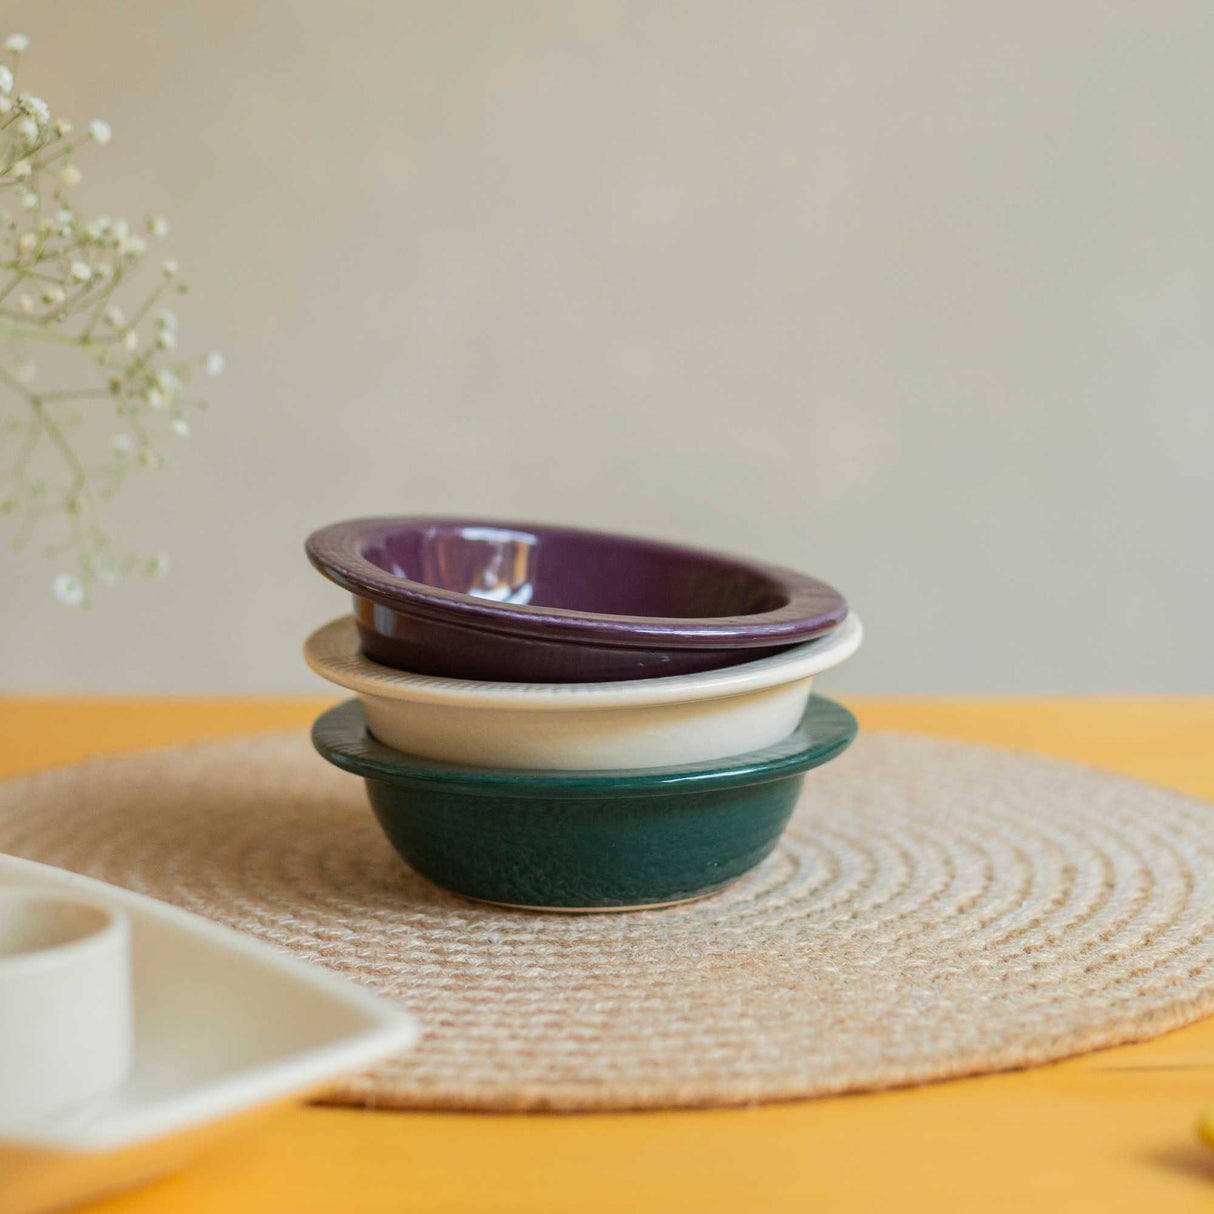 Ceramic bowls stacked